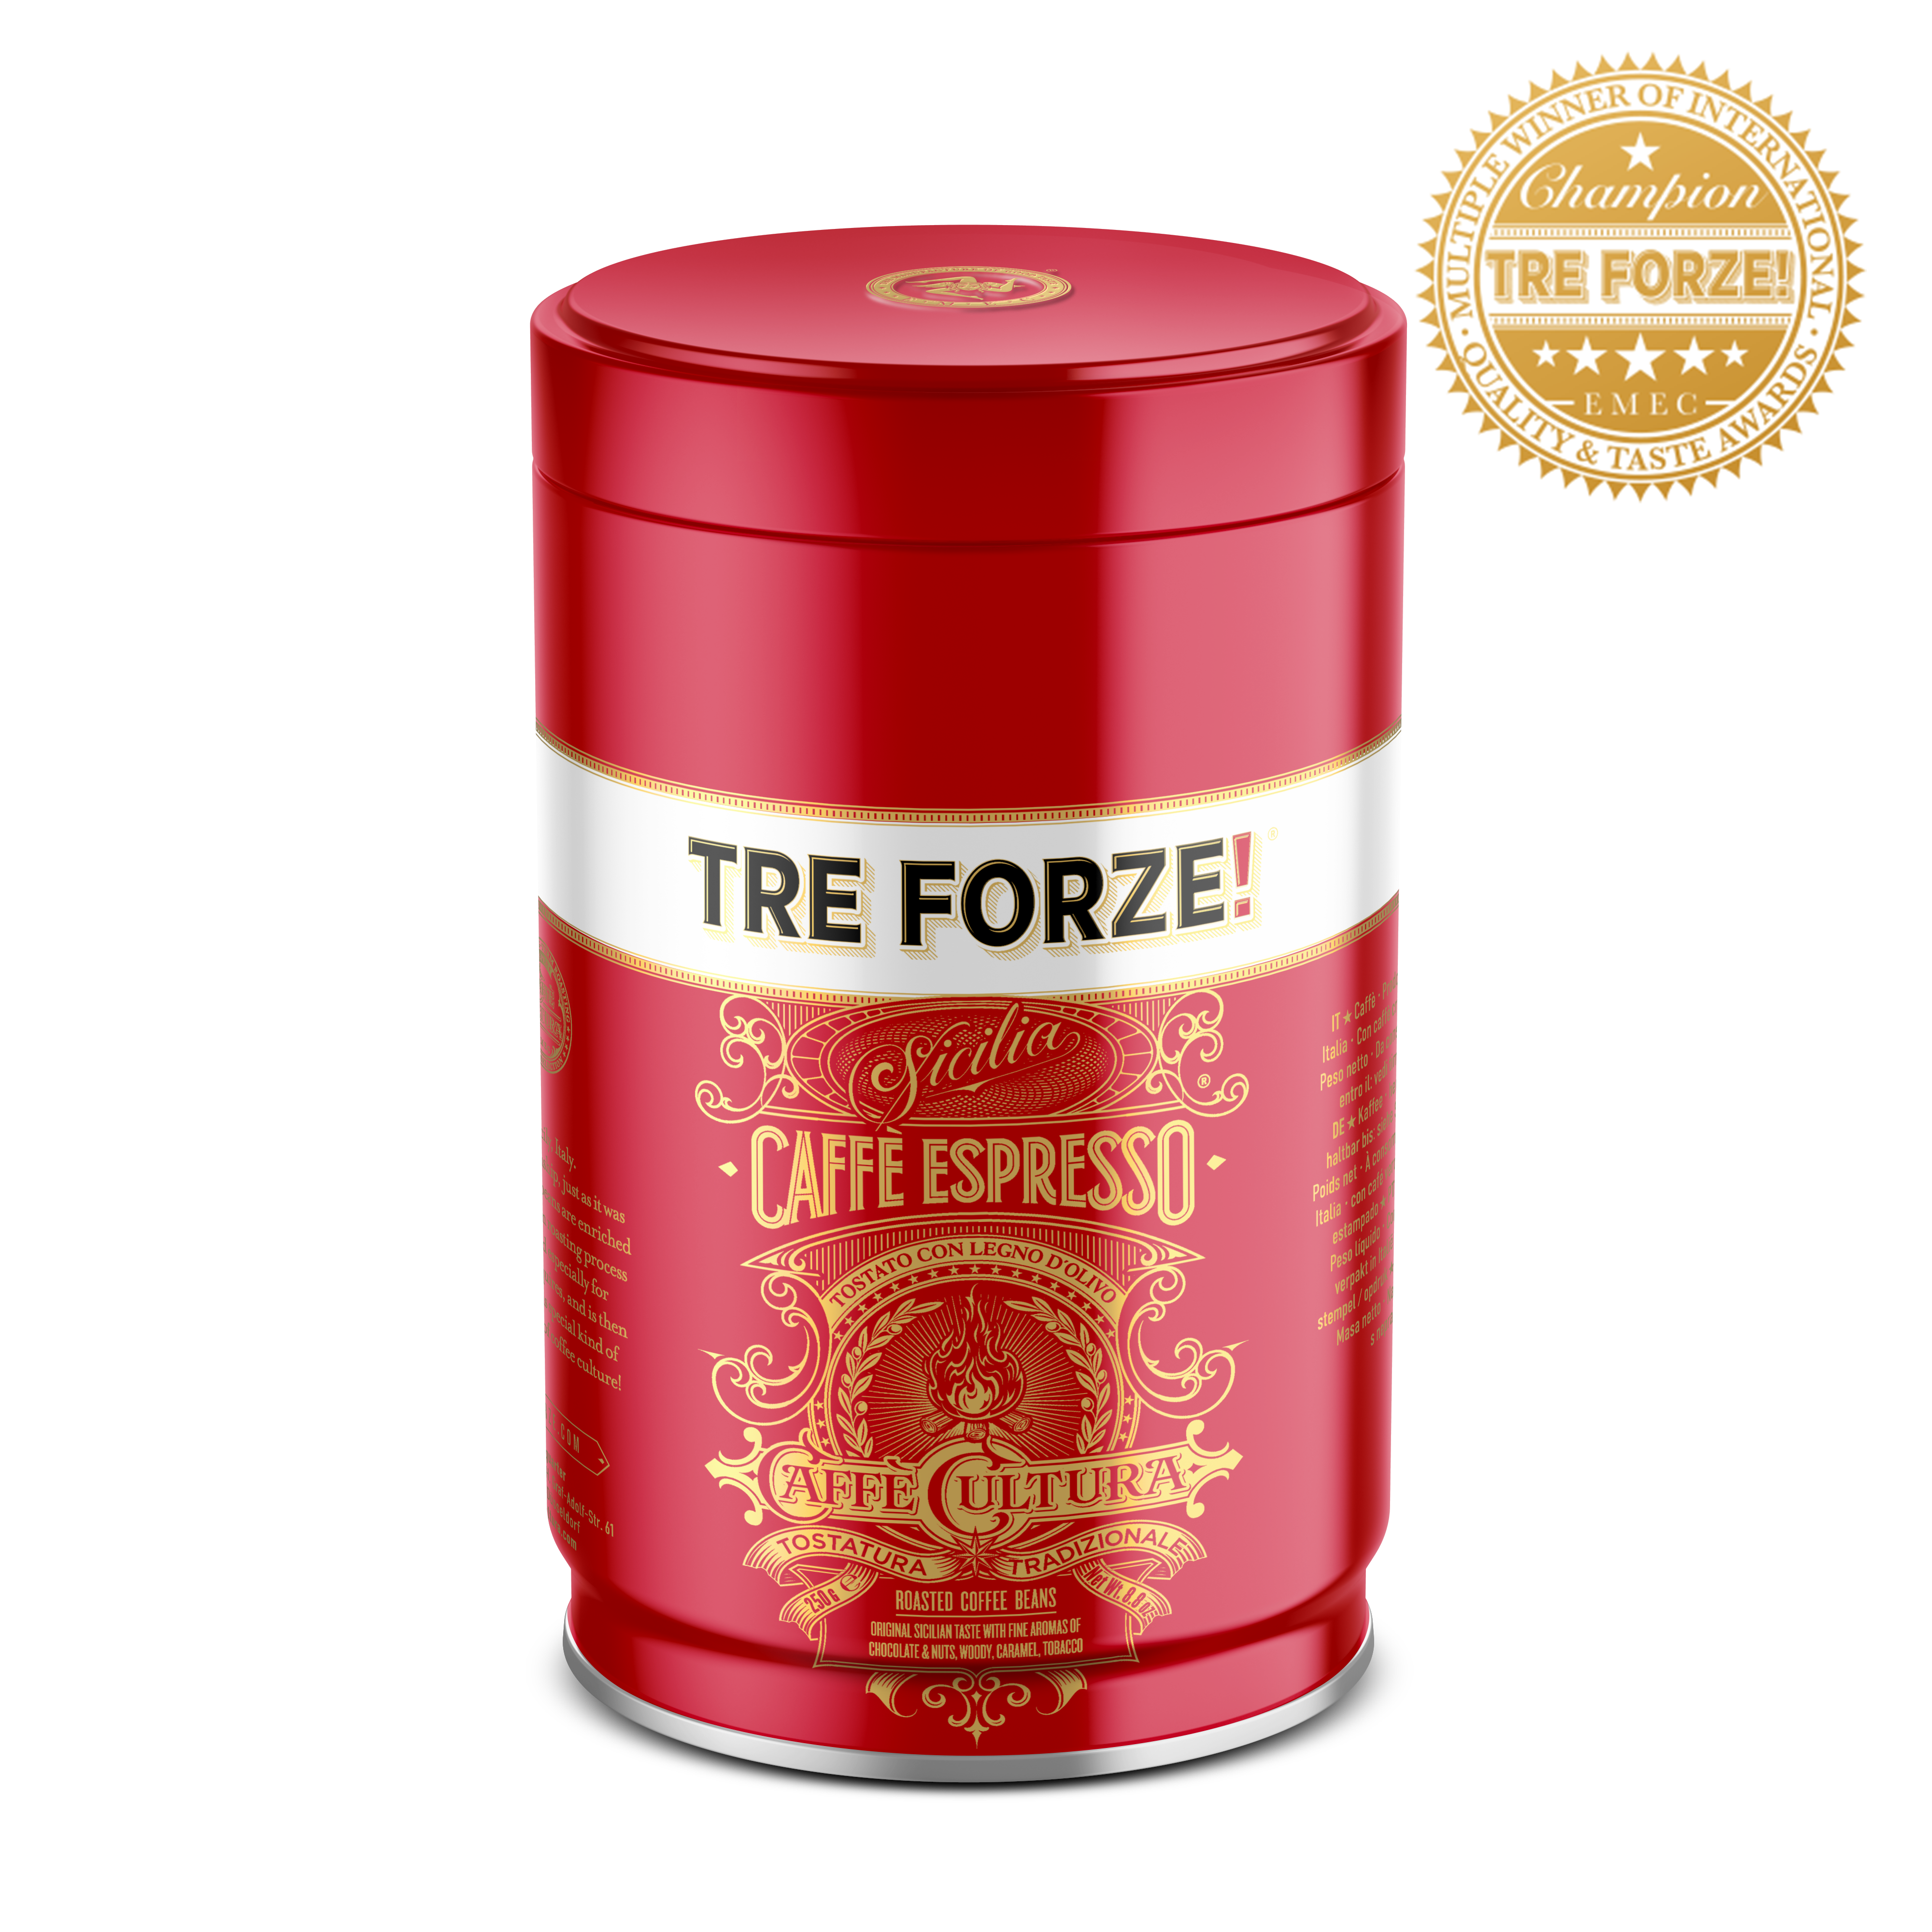 TRE FORZE! - Caffè Espresso - 250g Bohnen